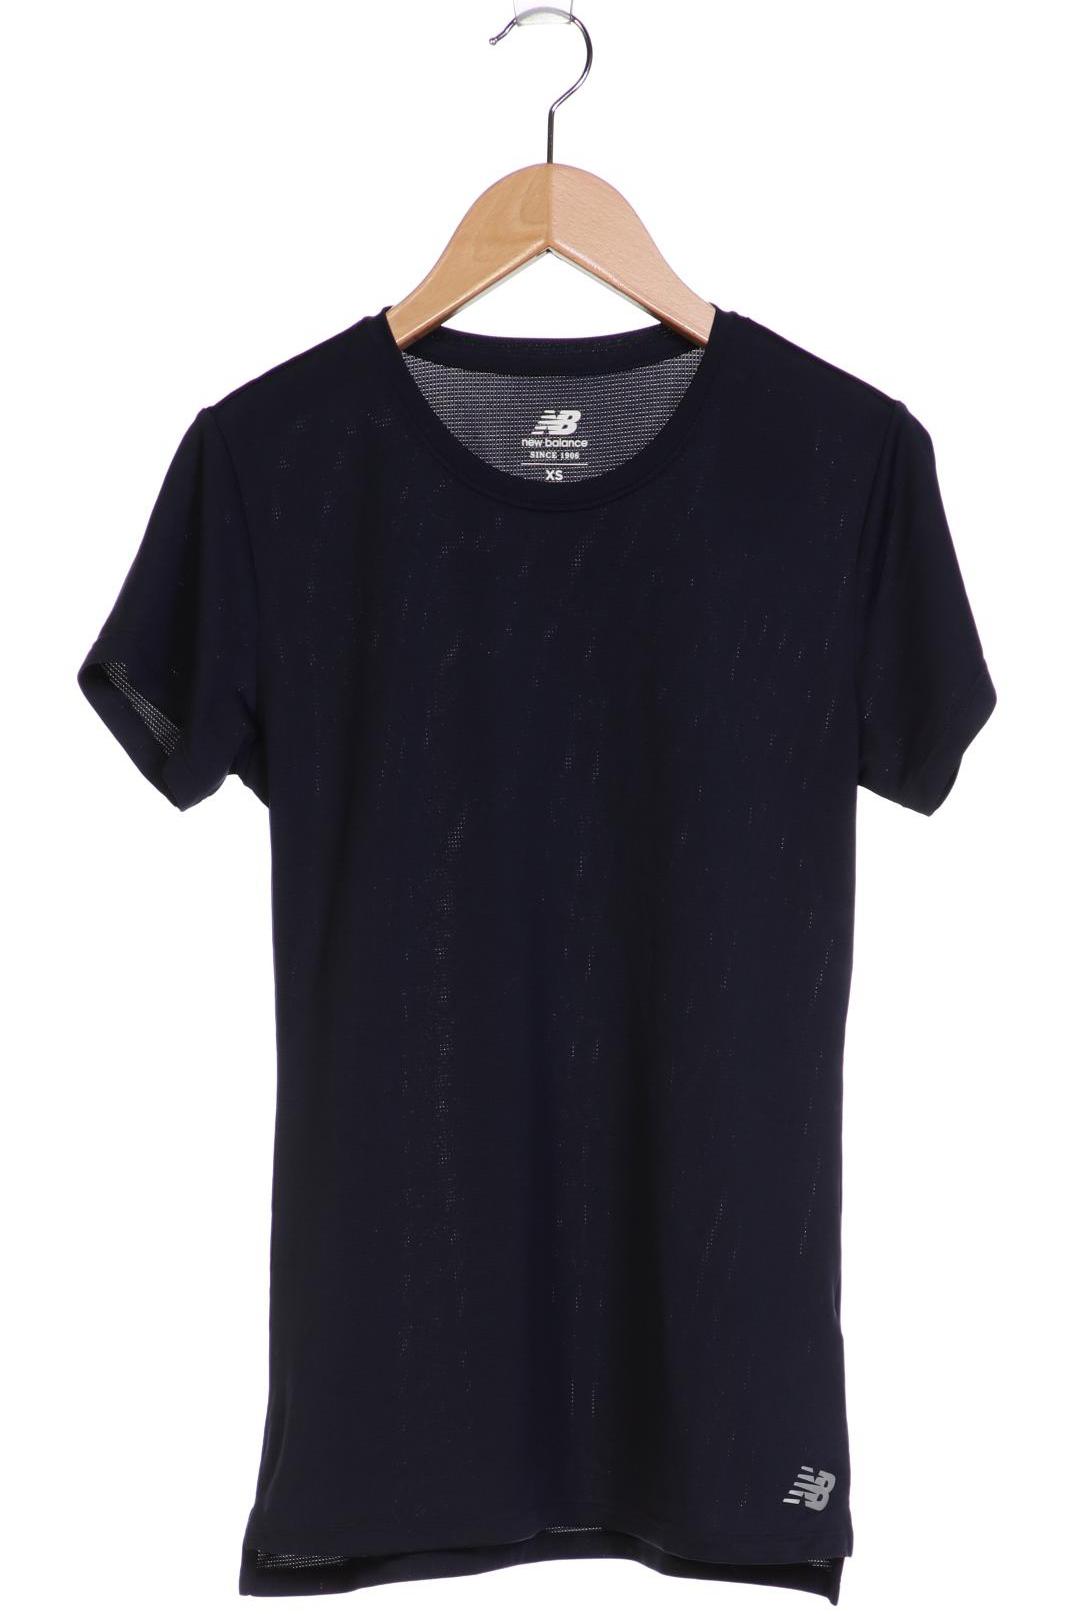 New Balance Damen T-Shirt, marineblau von New Balance